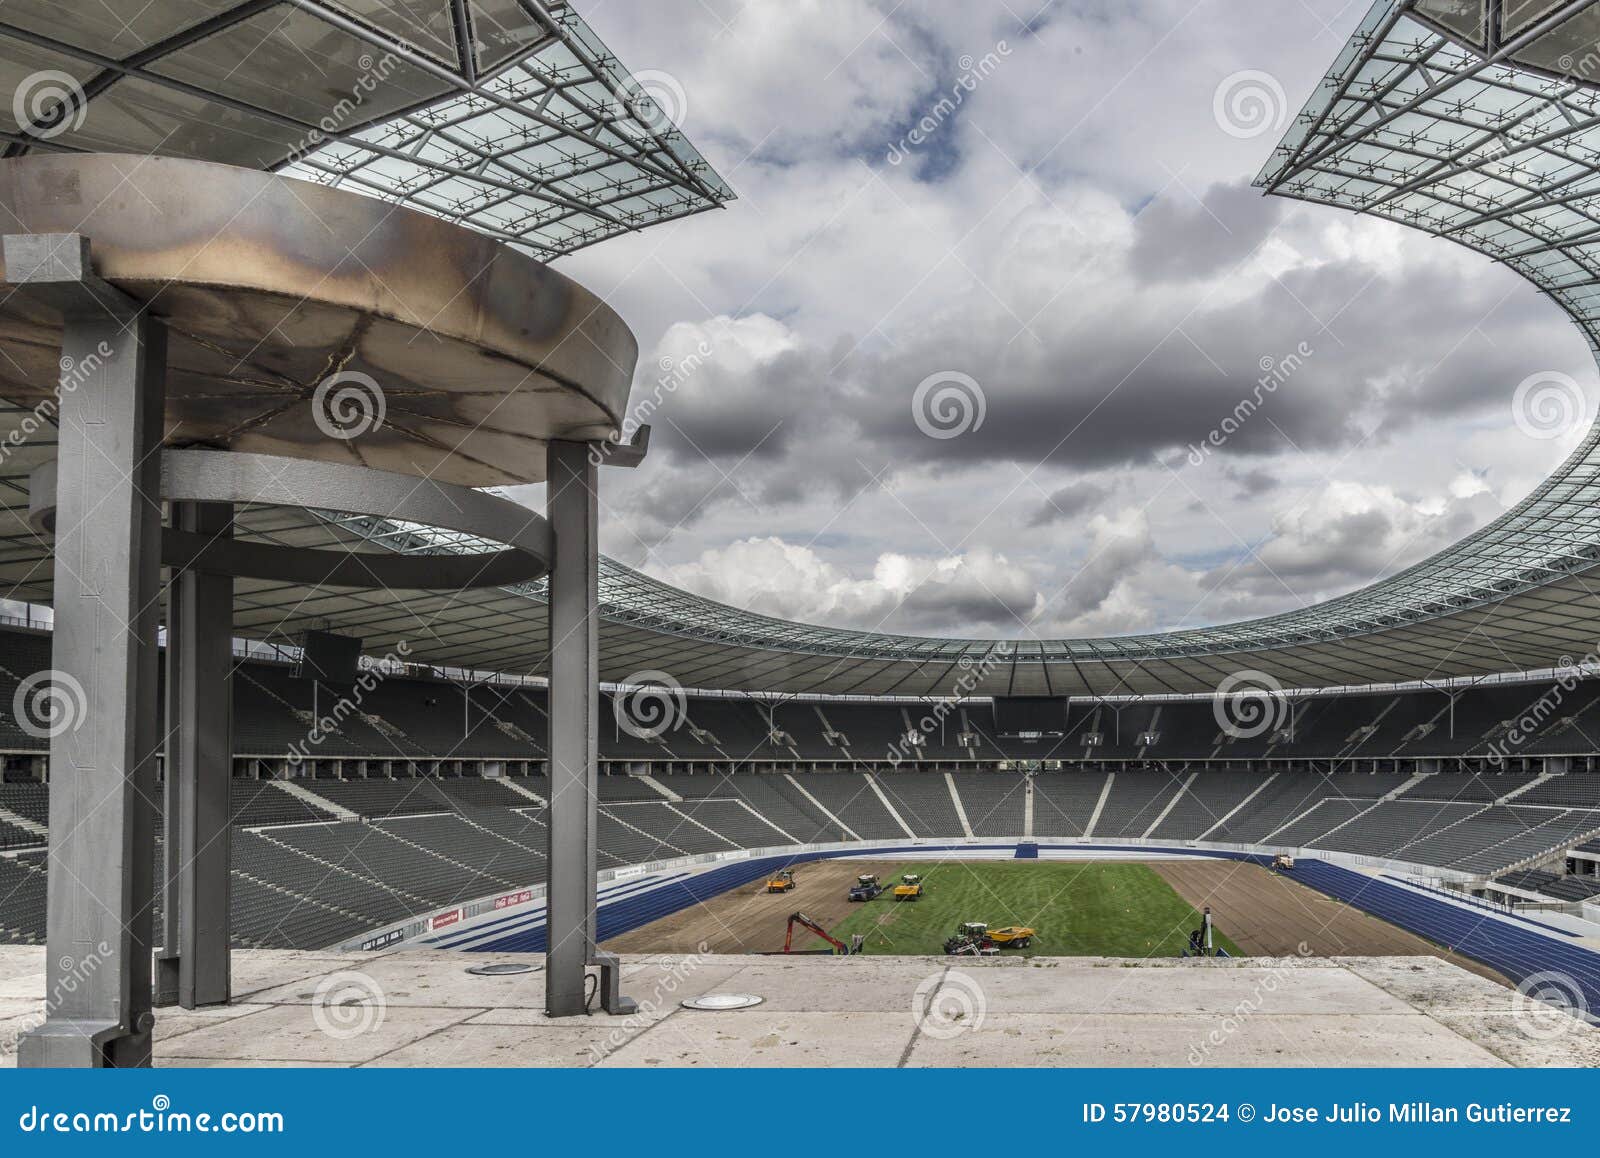 berlin olympic stadiums